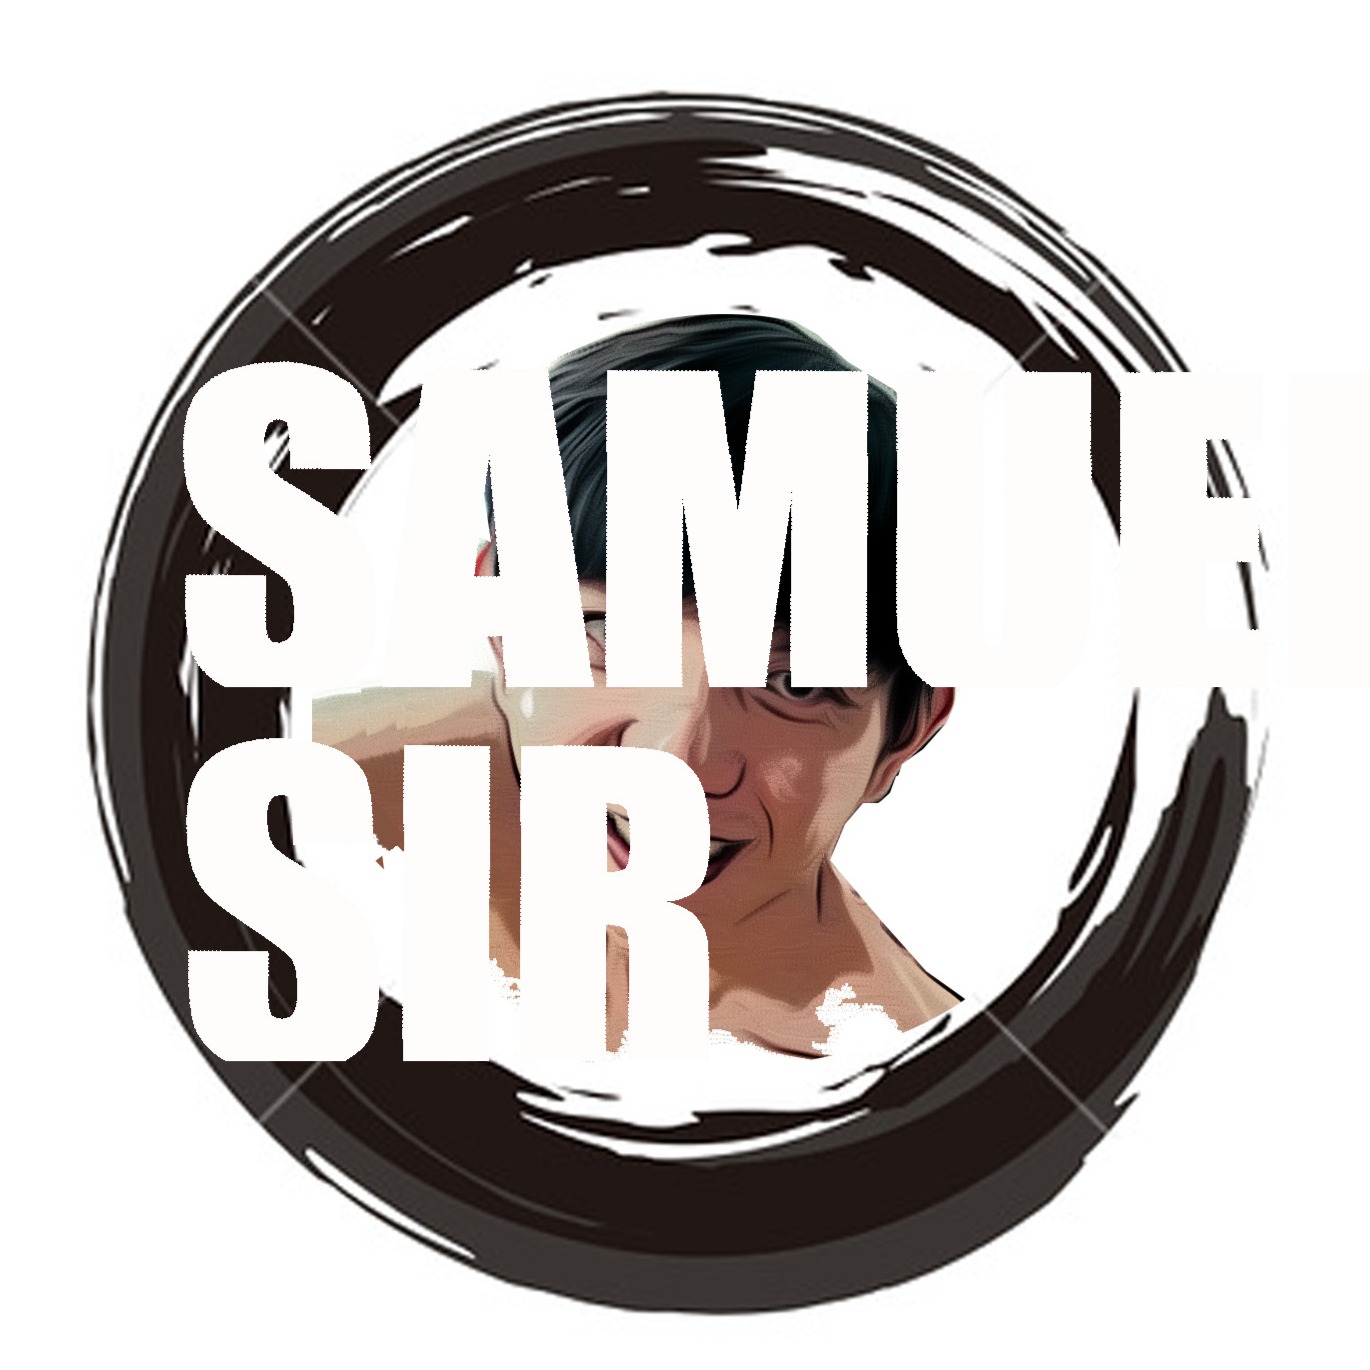 Samuel sir